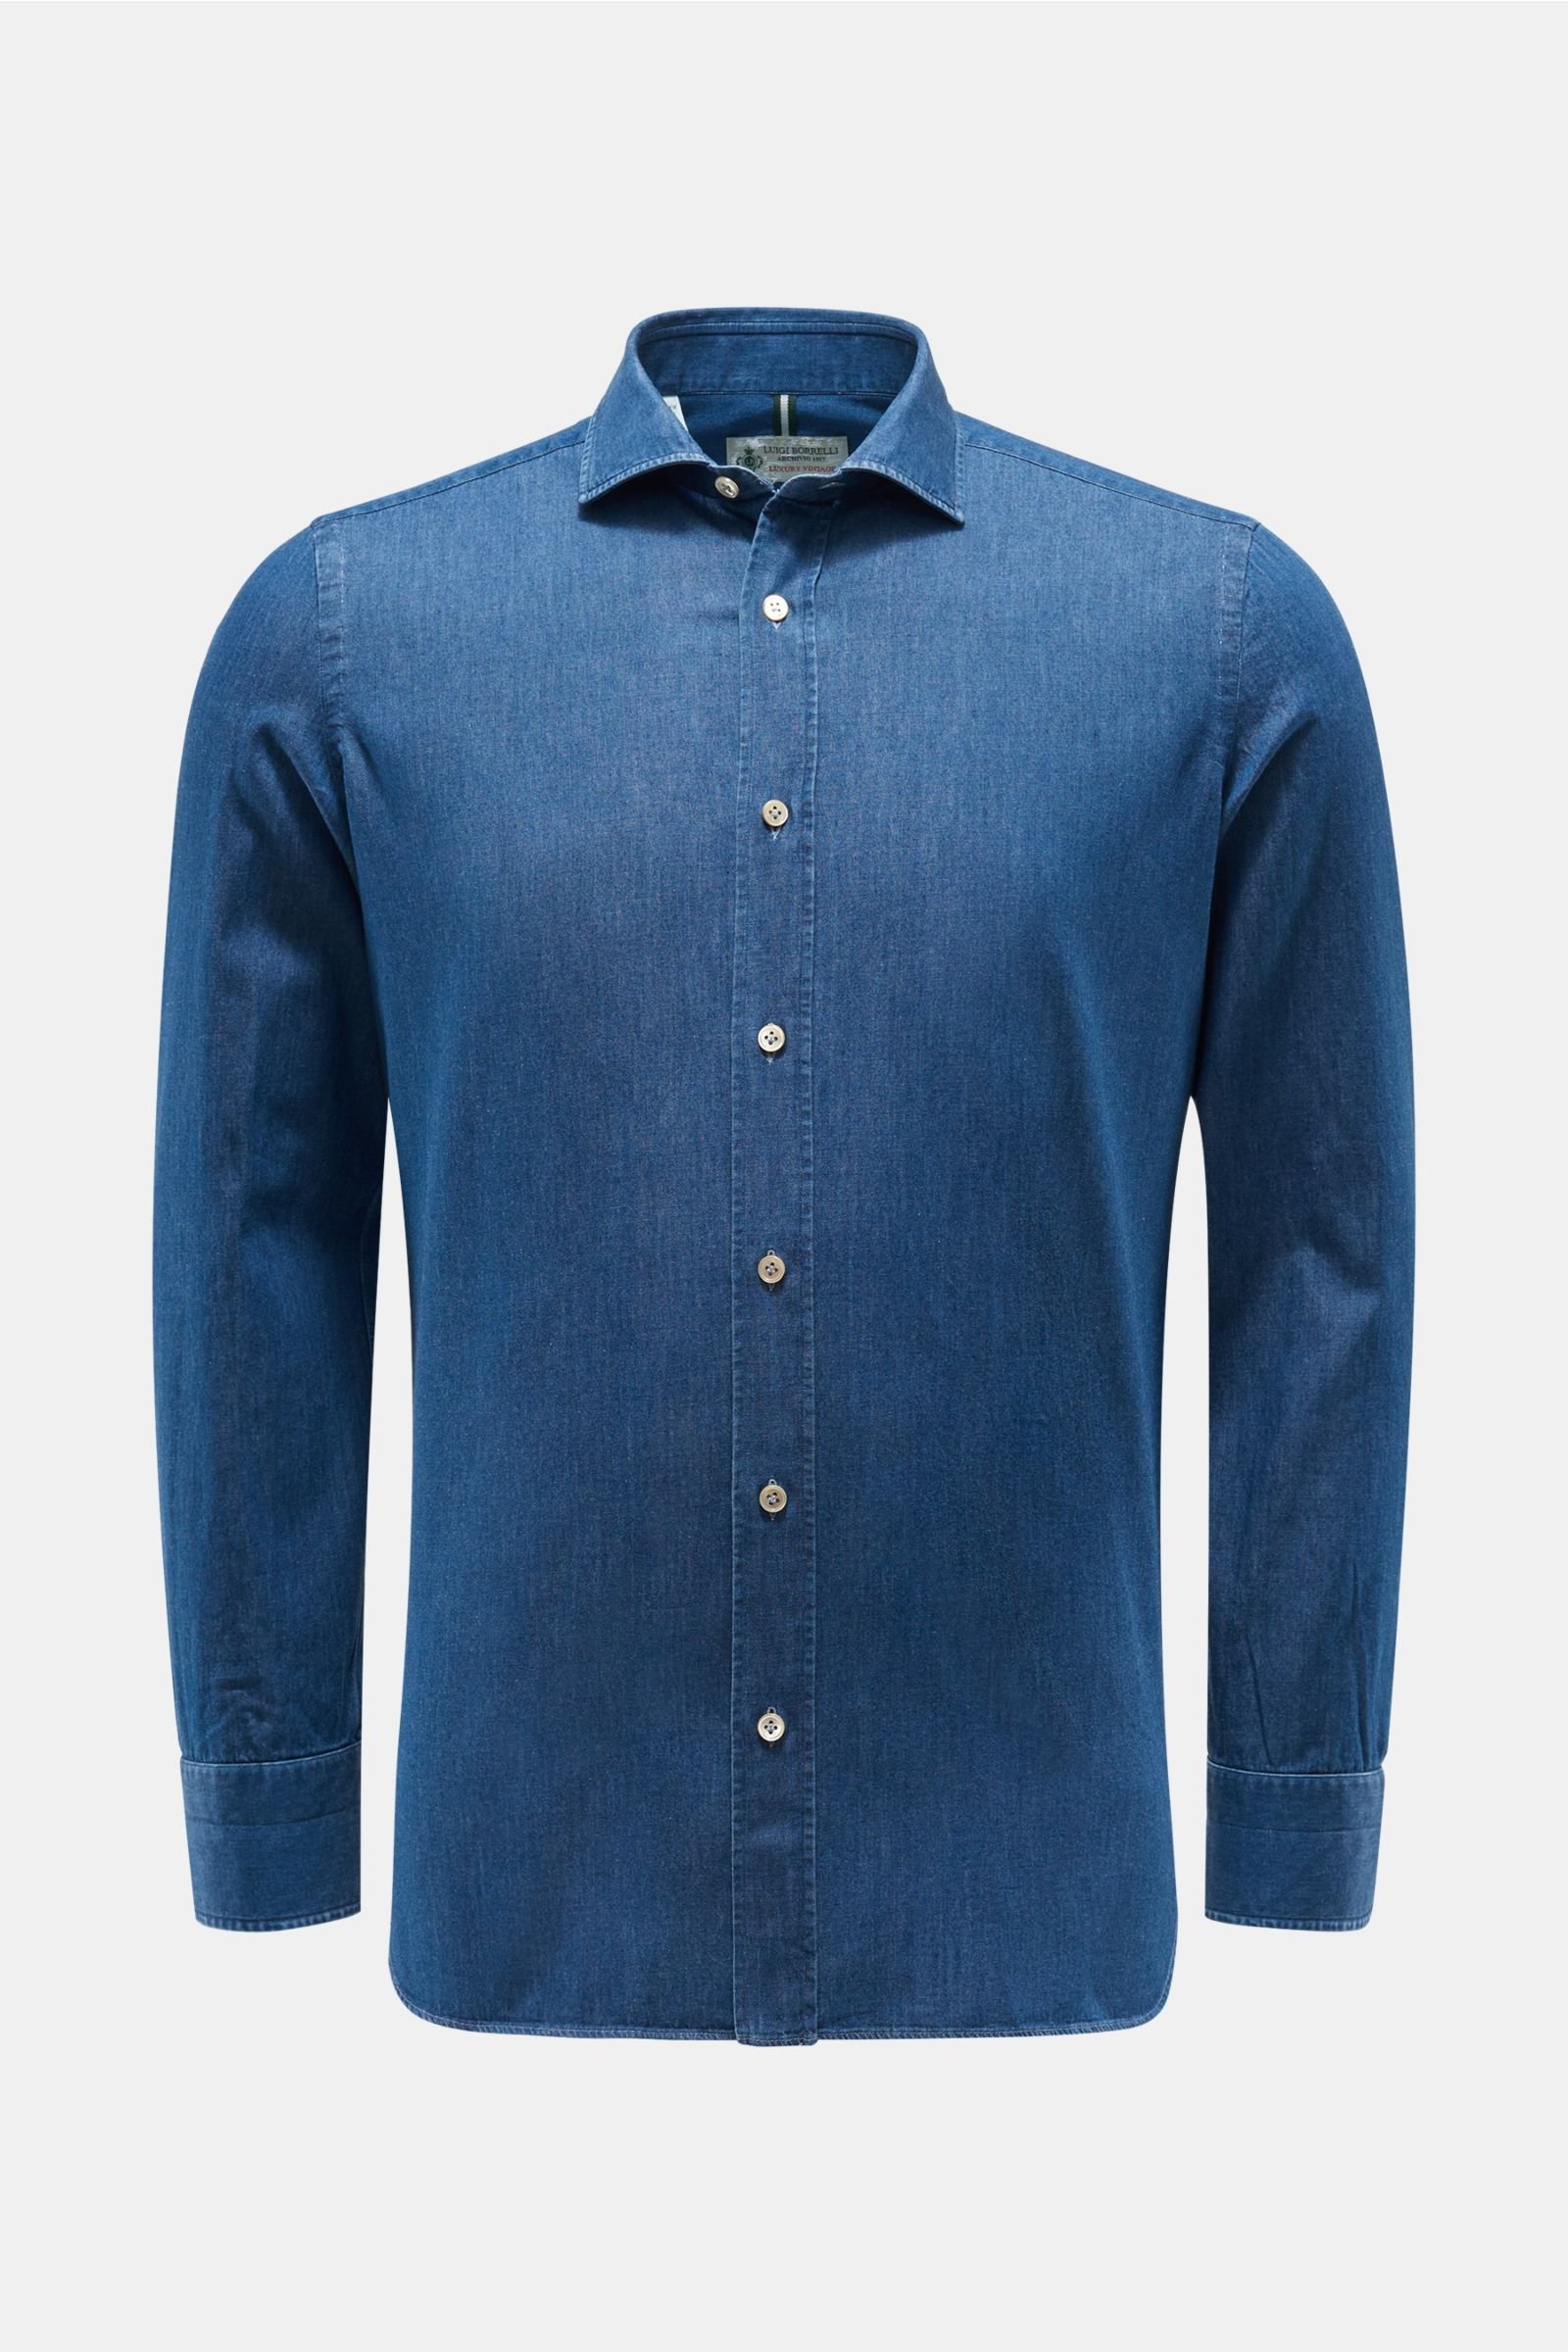 Chambray shirt slim collar dark blue